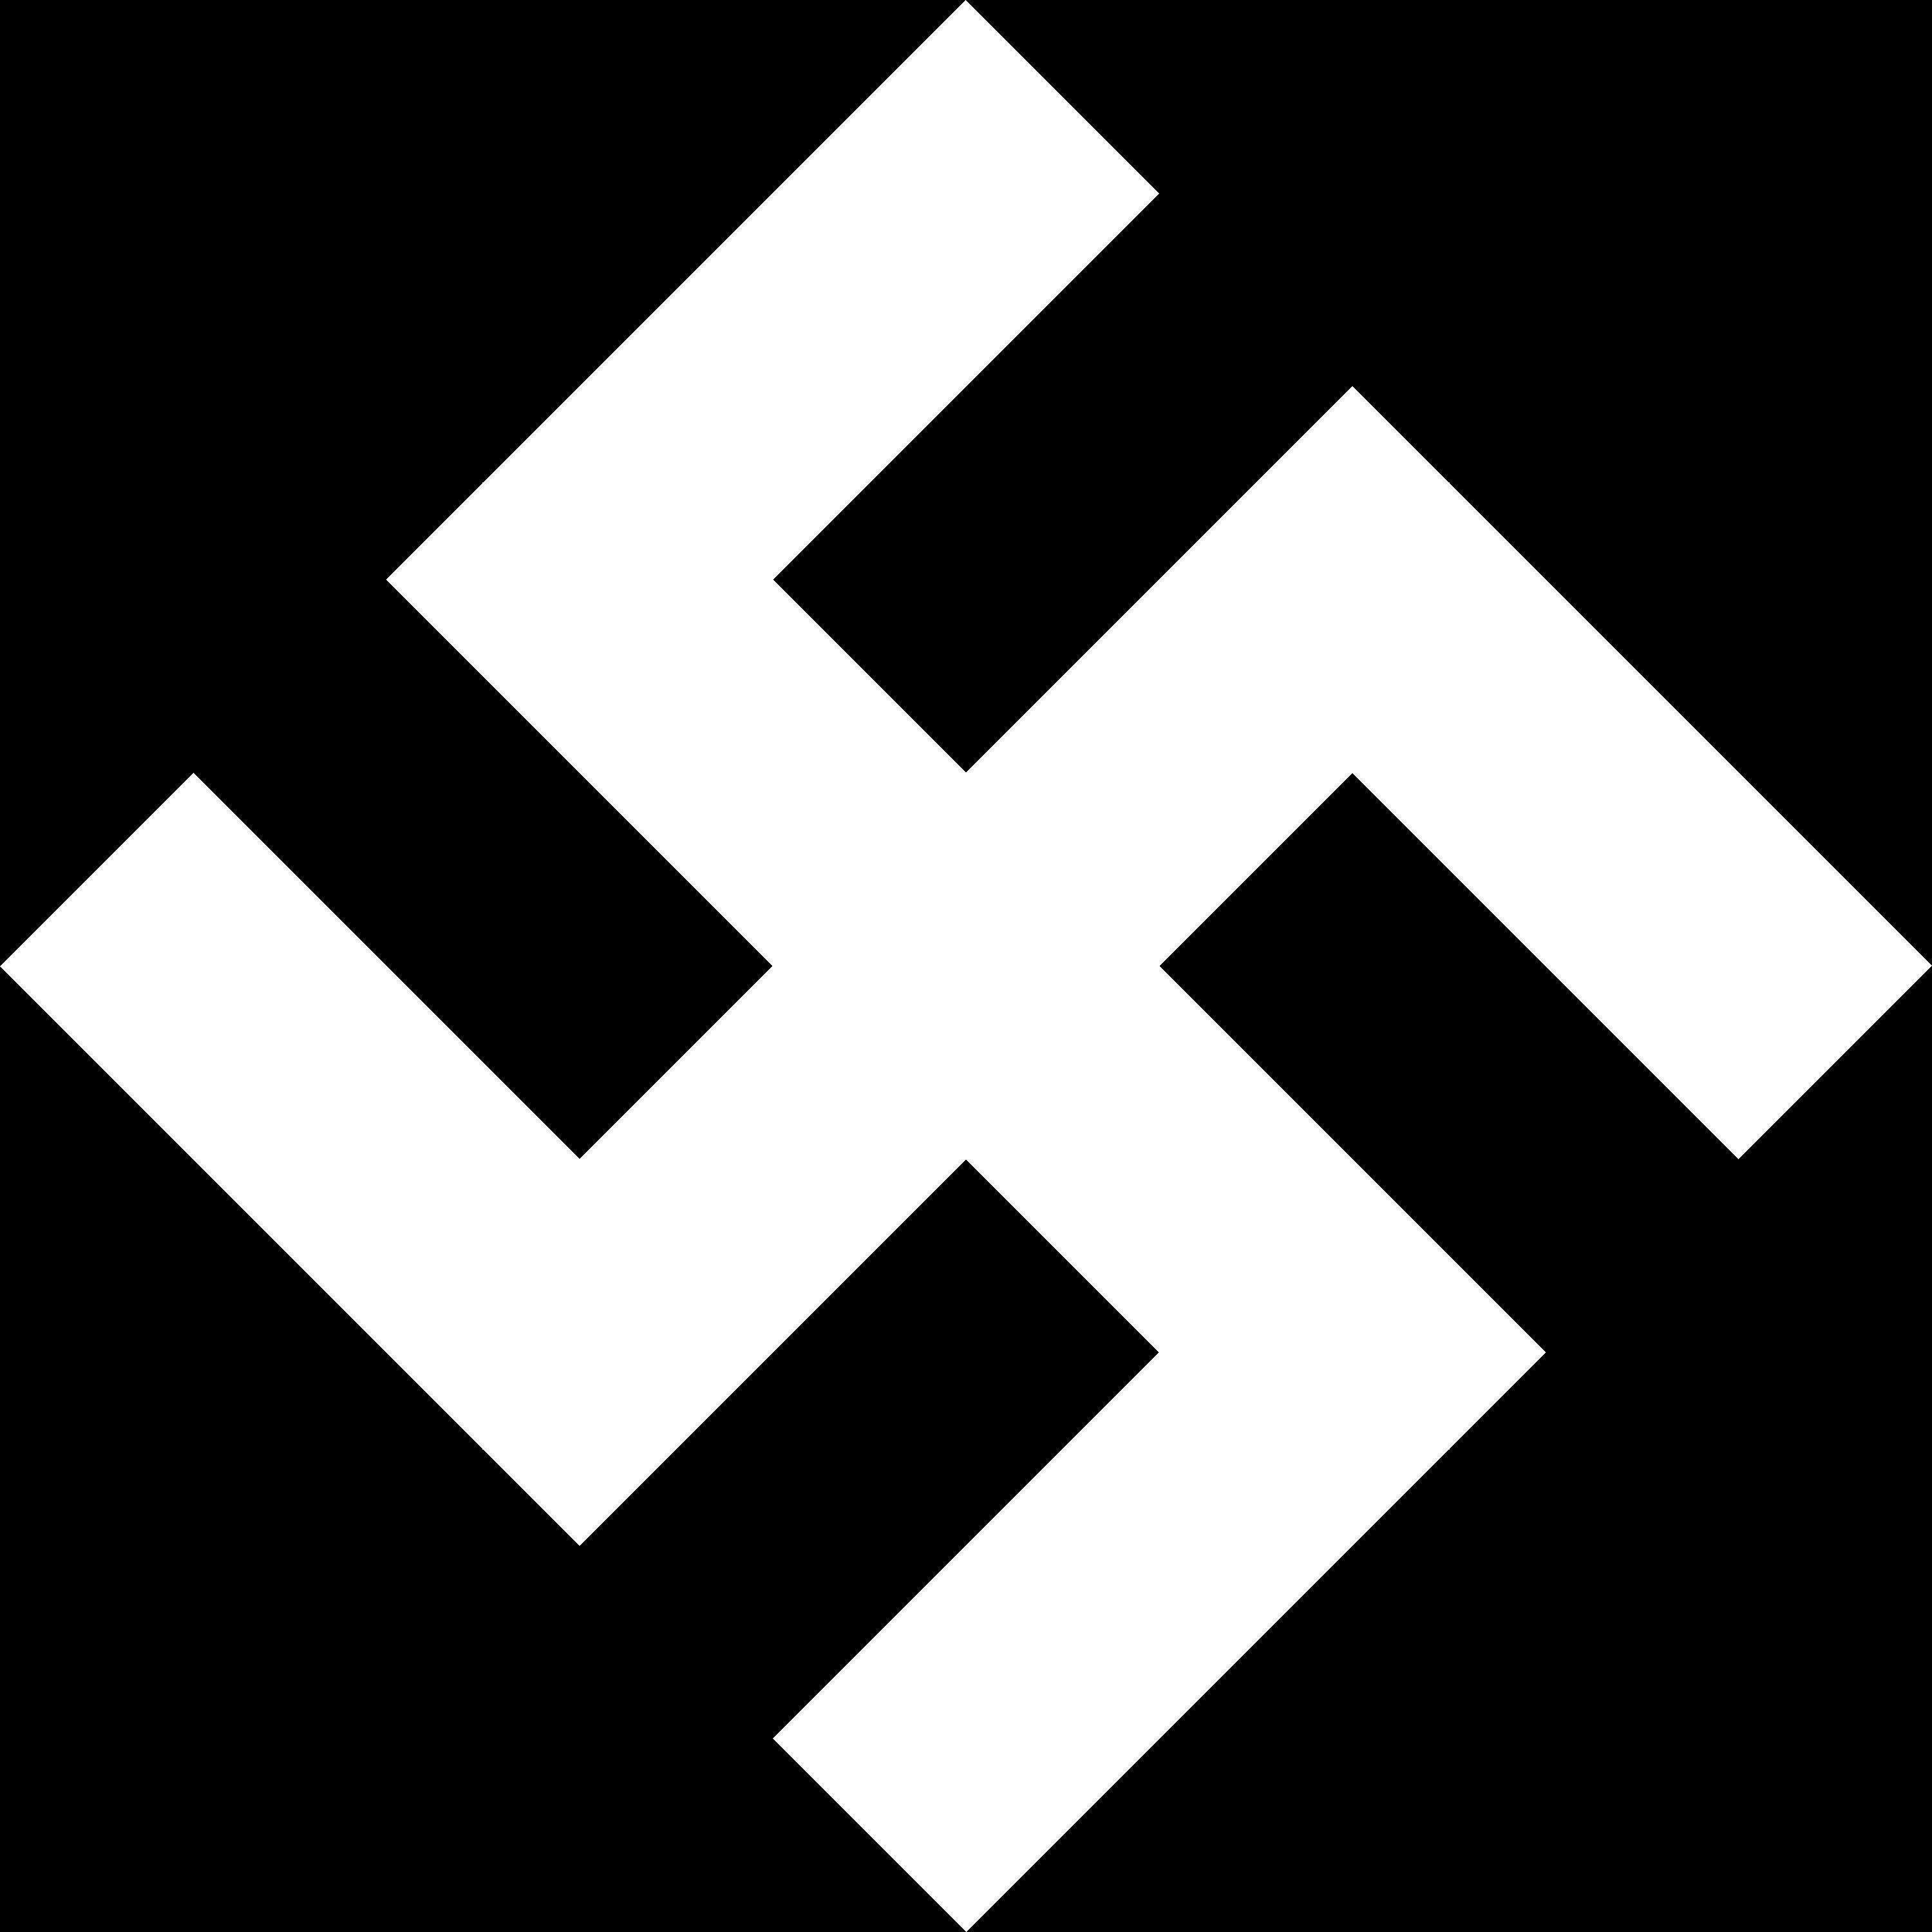 Swastika Logo - Swastika logo vector download free